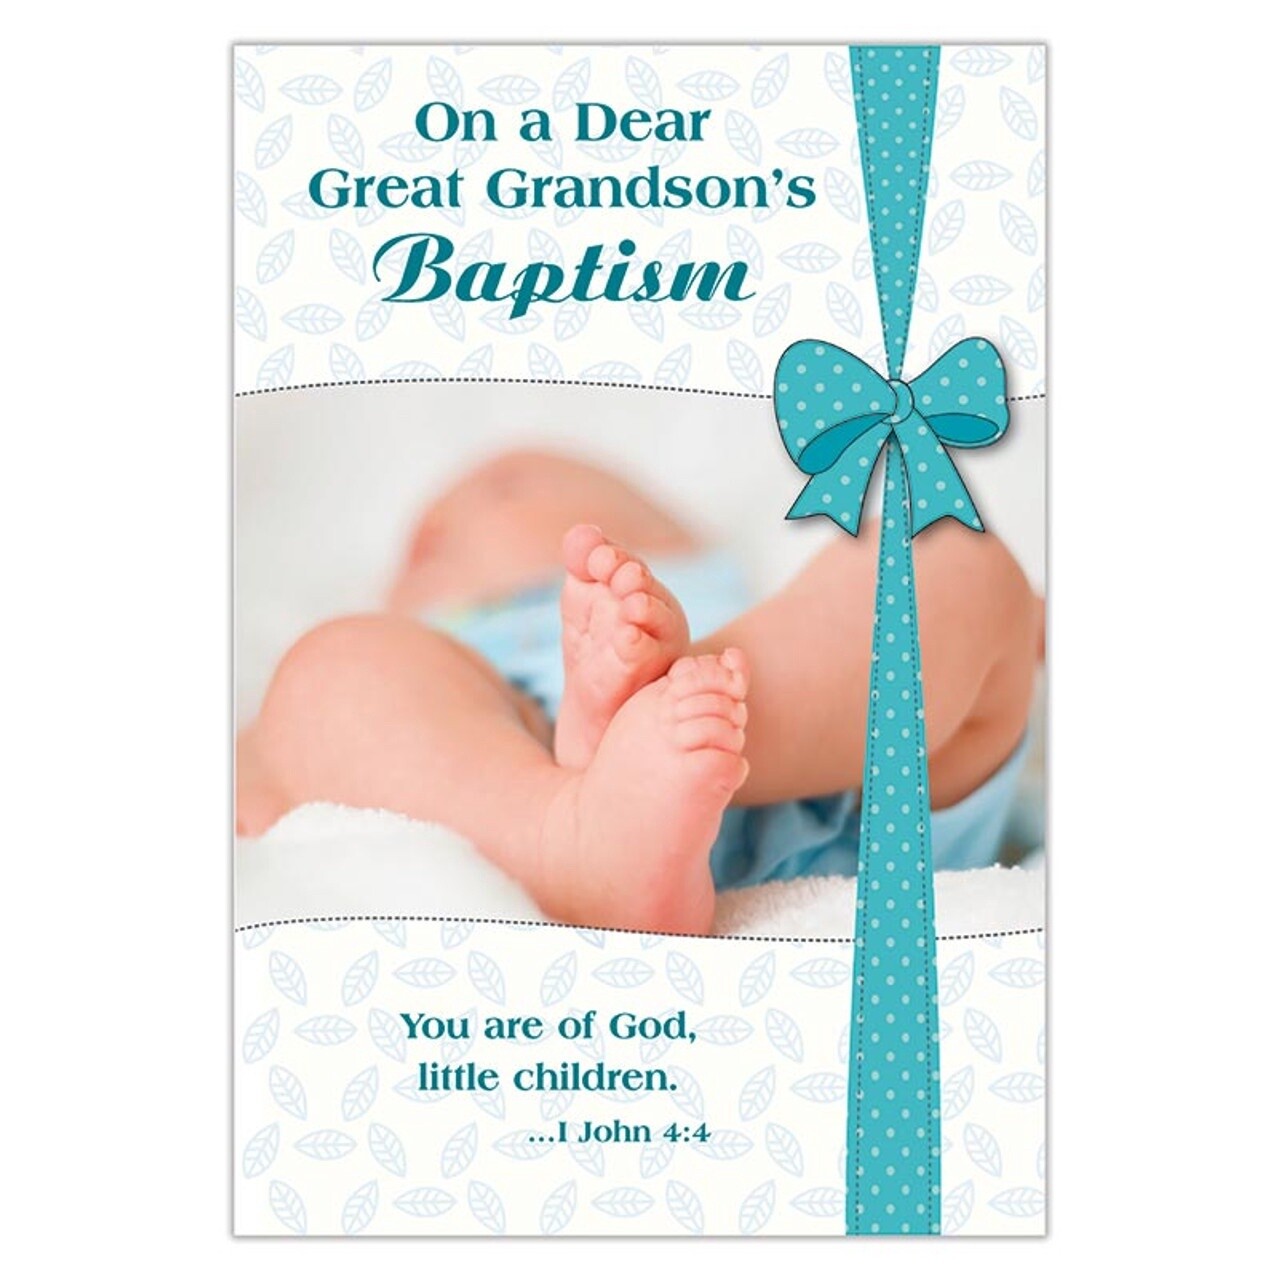 Dear Great Grandson's Baptism Card